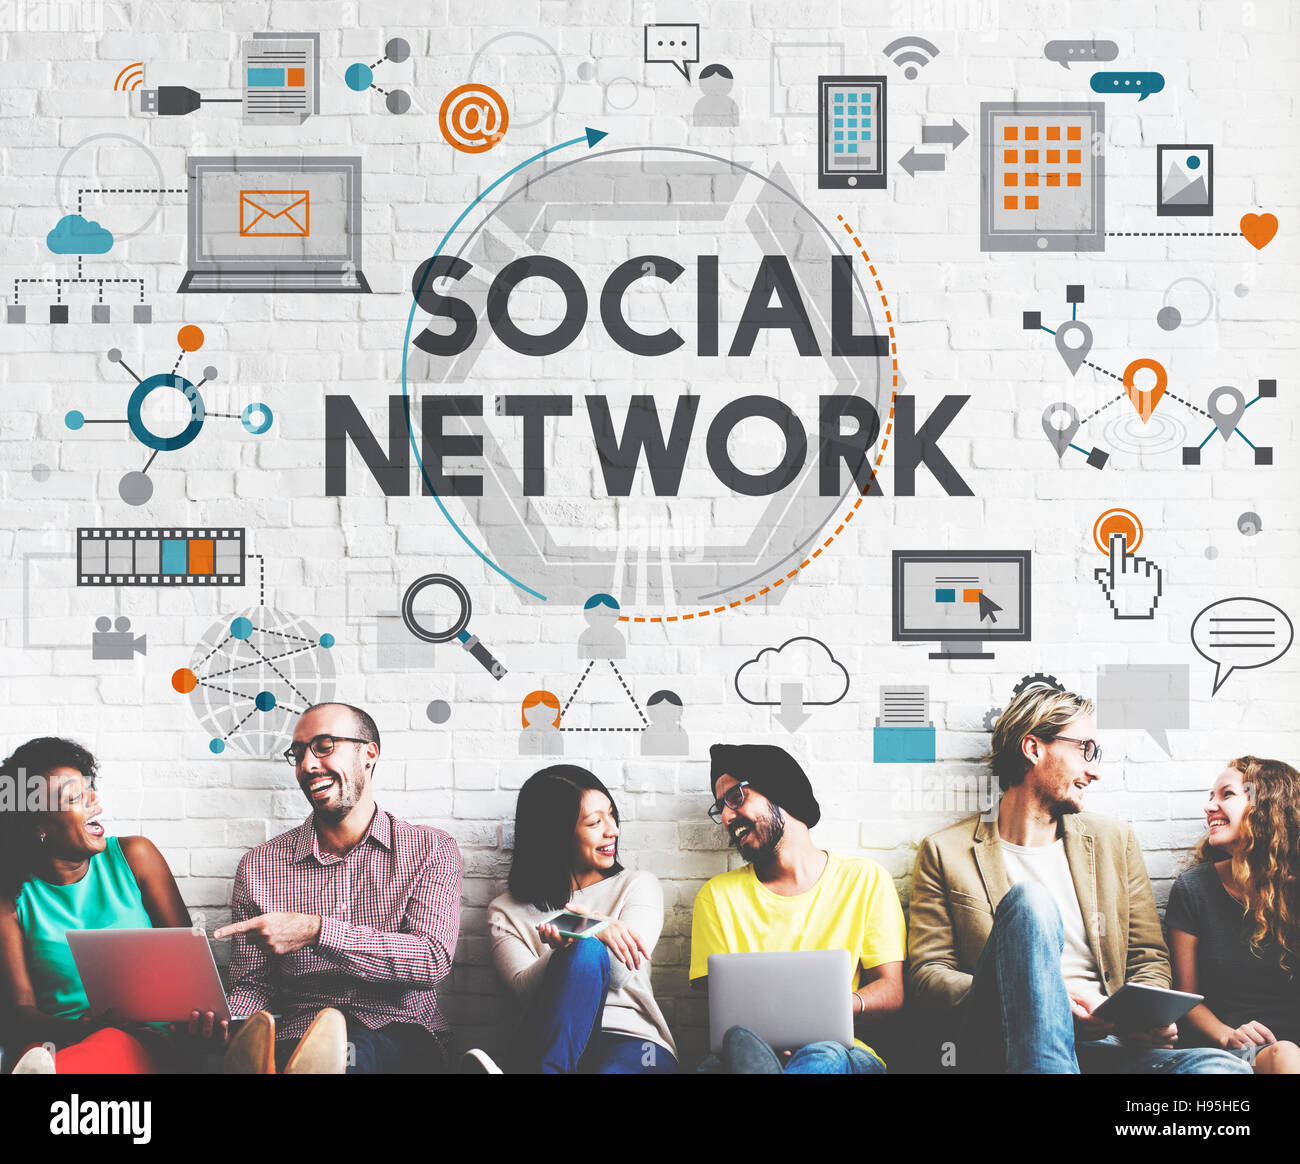 Social Network Communication Media Technology Concept Stock Photo